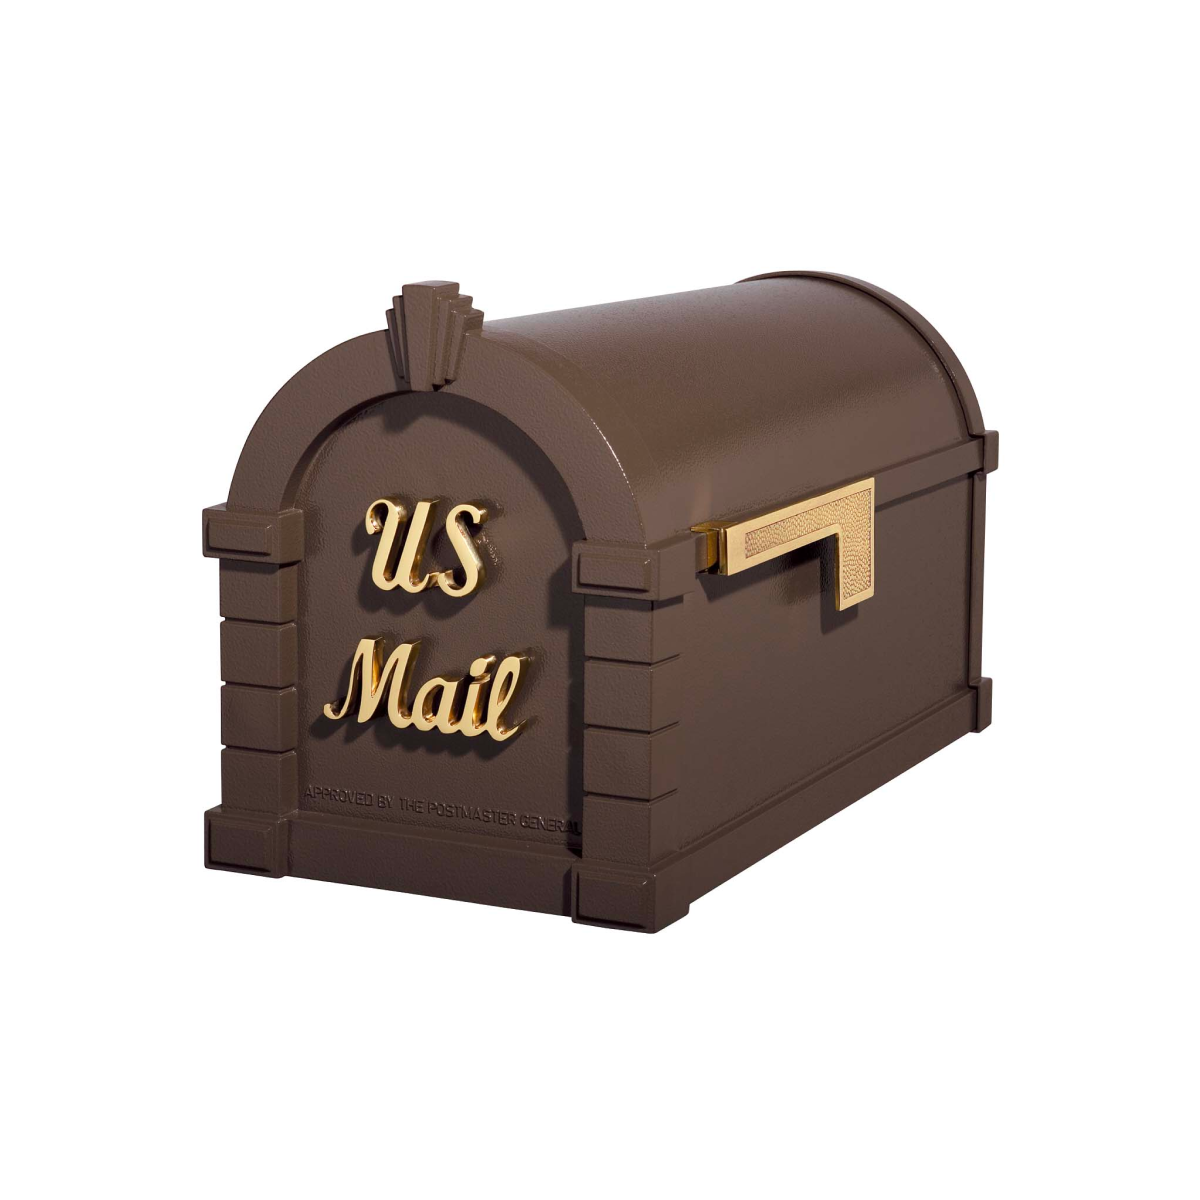 Keystone Signature Series Mailbox Product Image